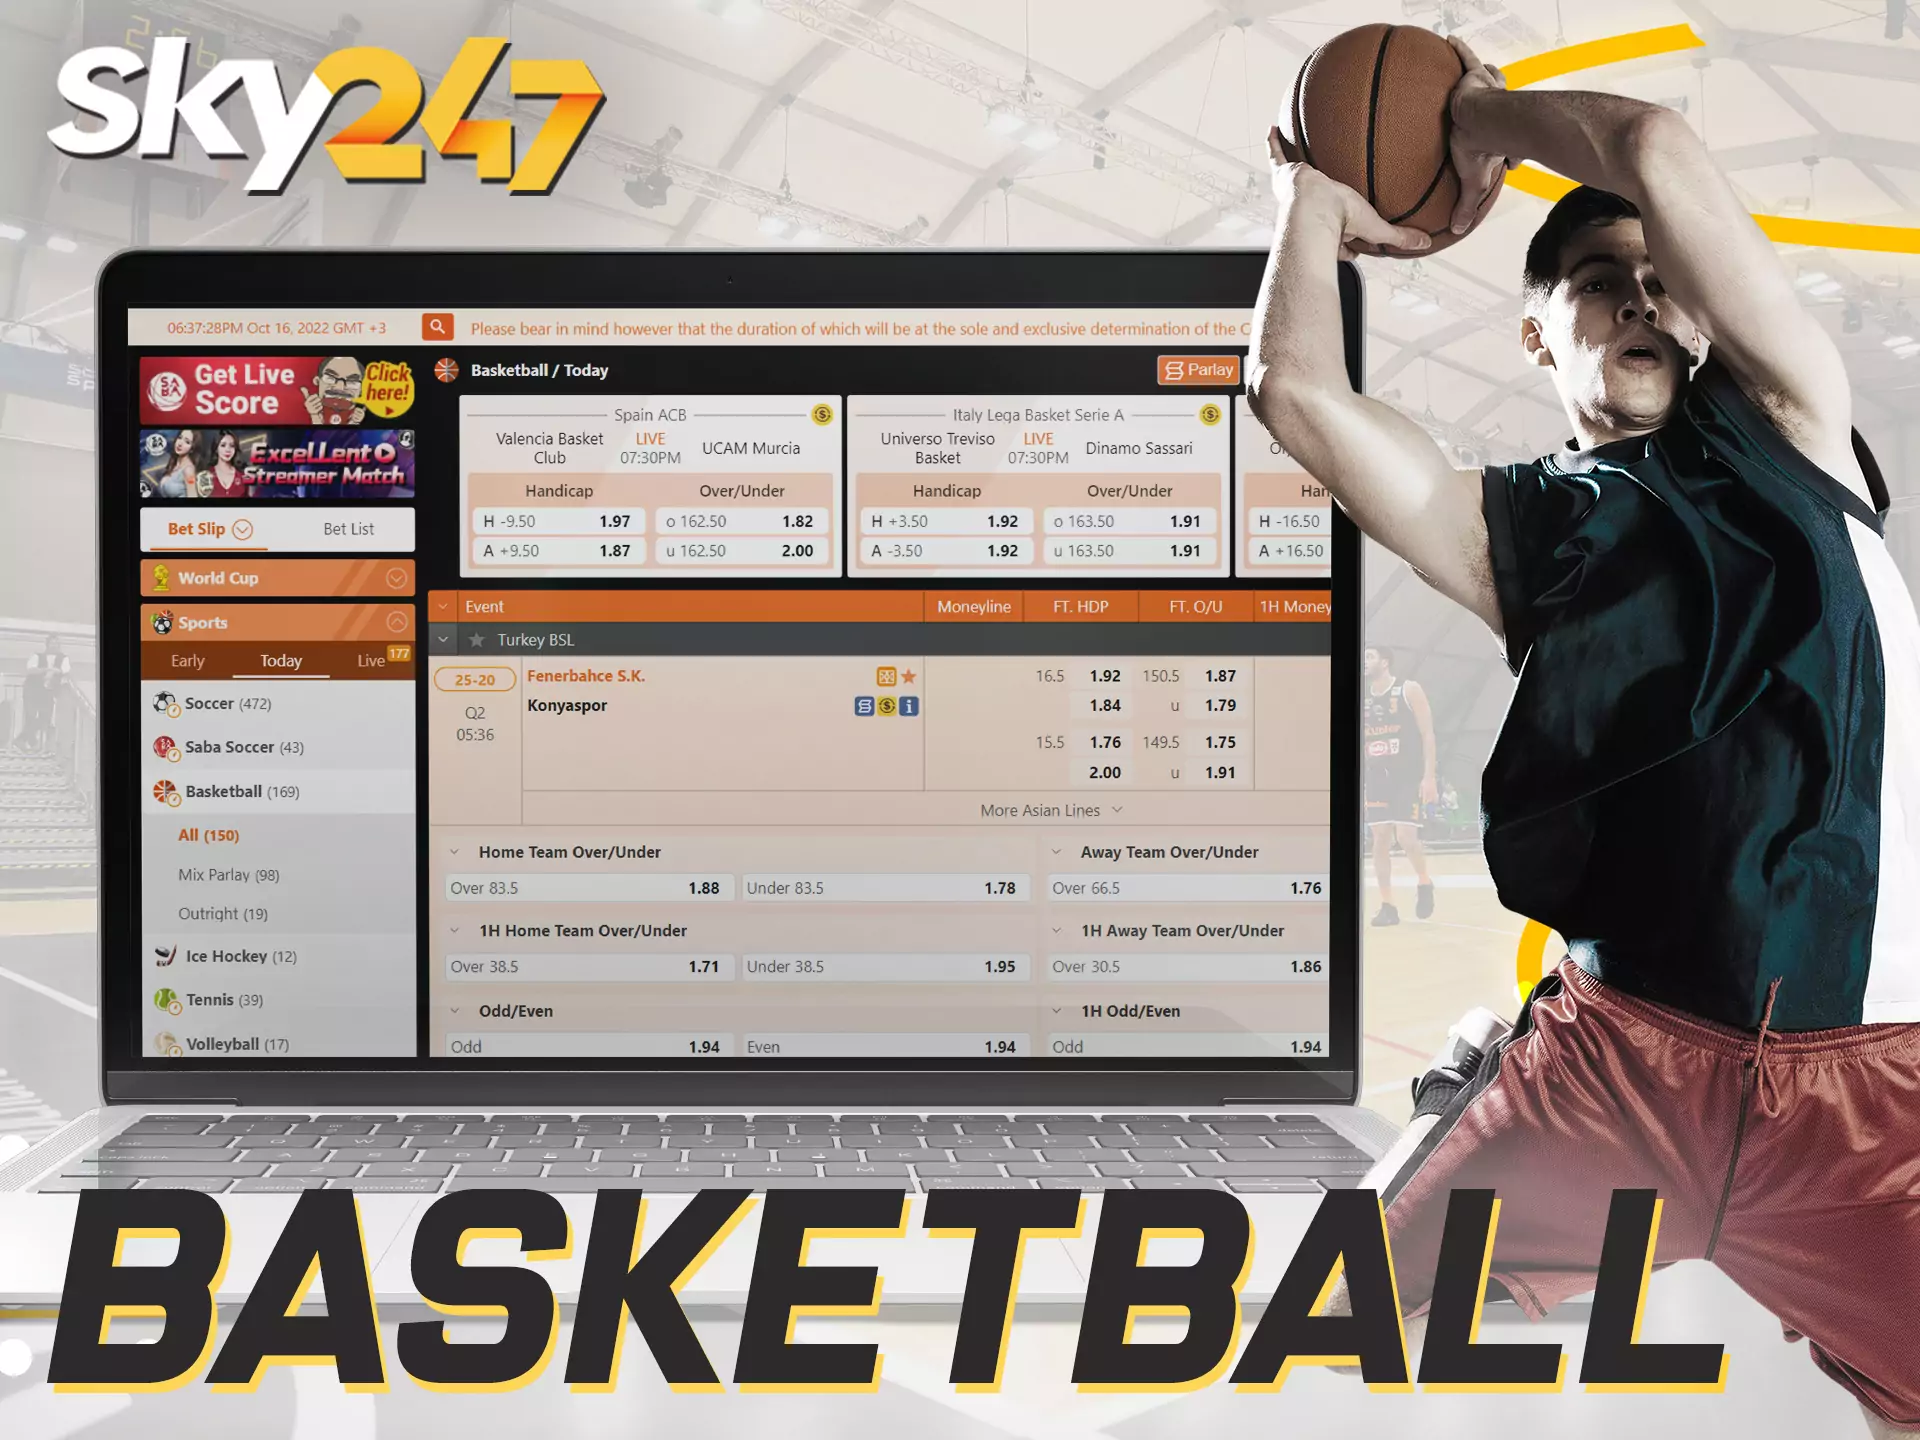 Sky247 provides online betting on basketball.